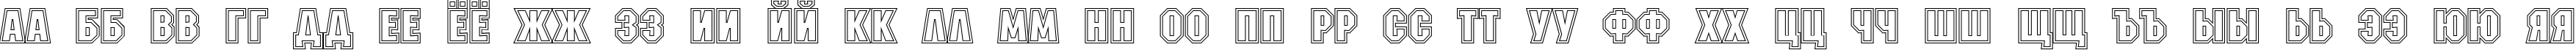 Пример написания русского алфавита шрифтом a_MachinaNova2Otl Bold